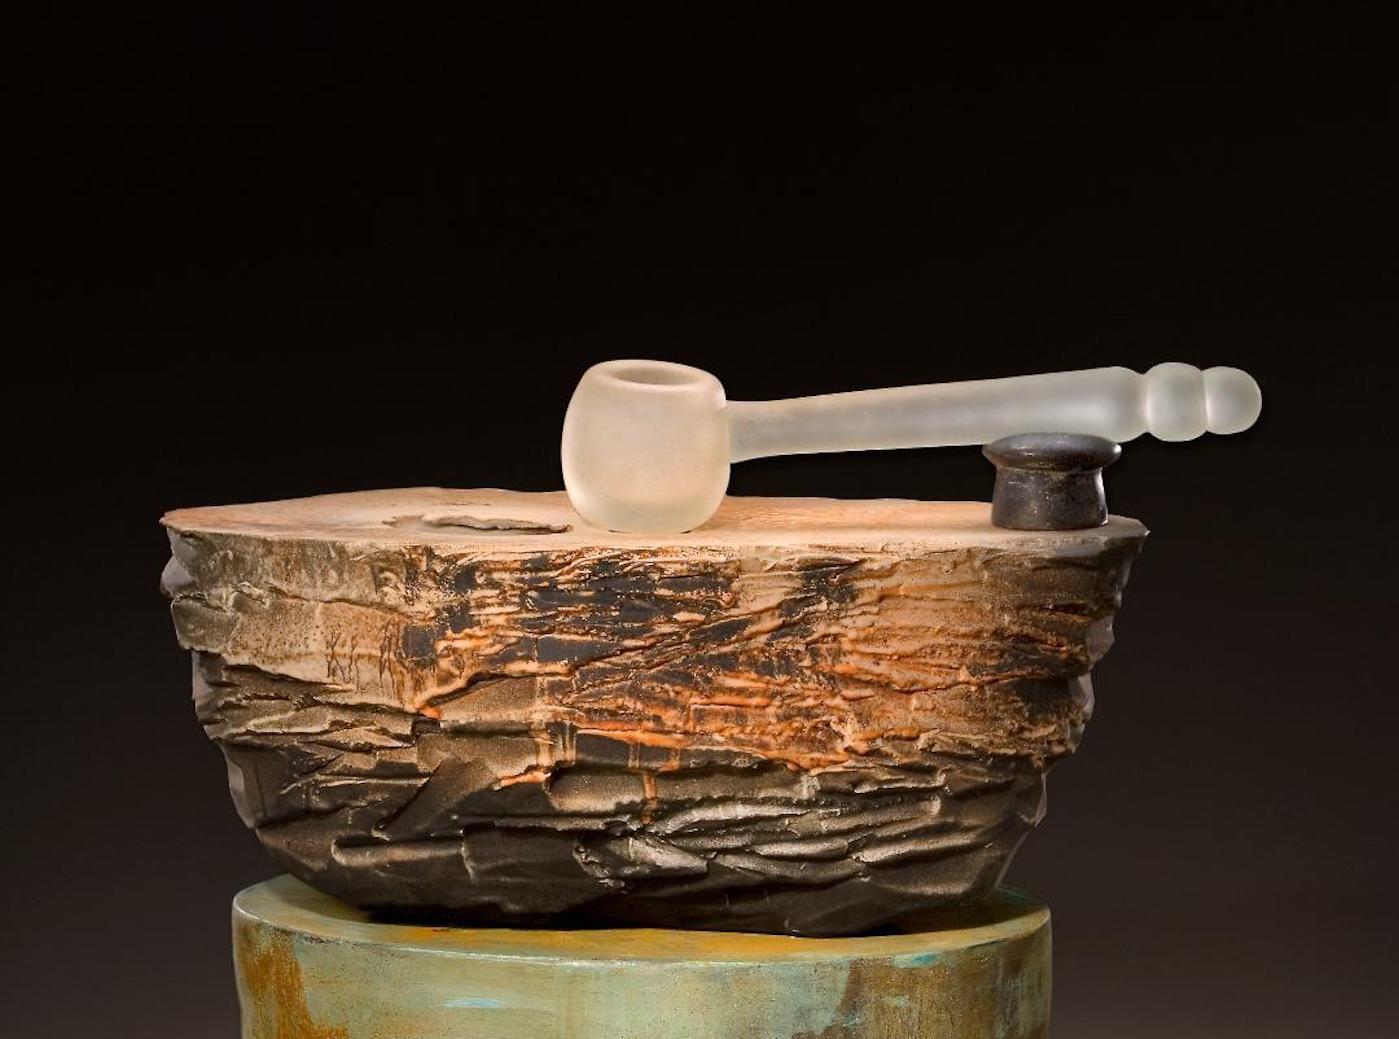 Glazed Richard Hirsch Ceramic Altar Bowl with Blown Glass Ladle #5, 2007 For Sale